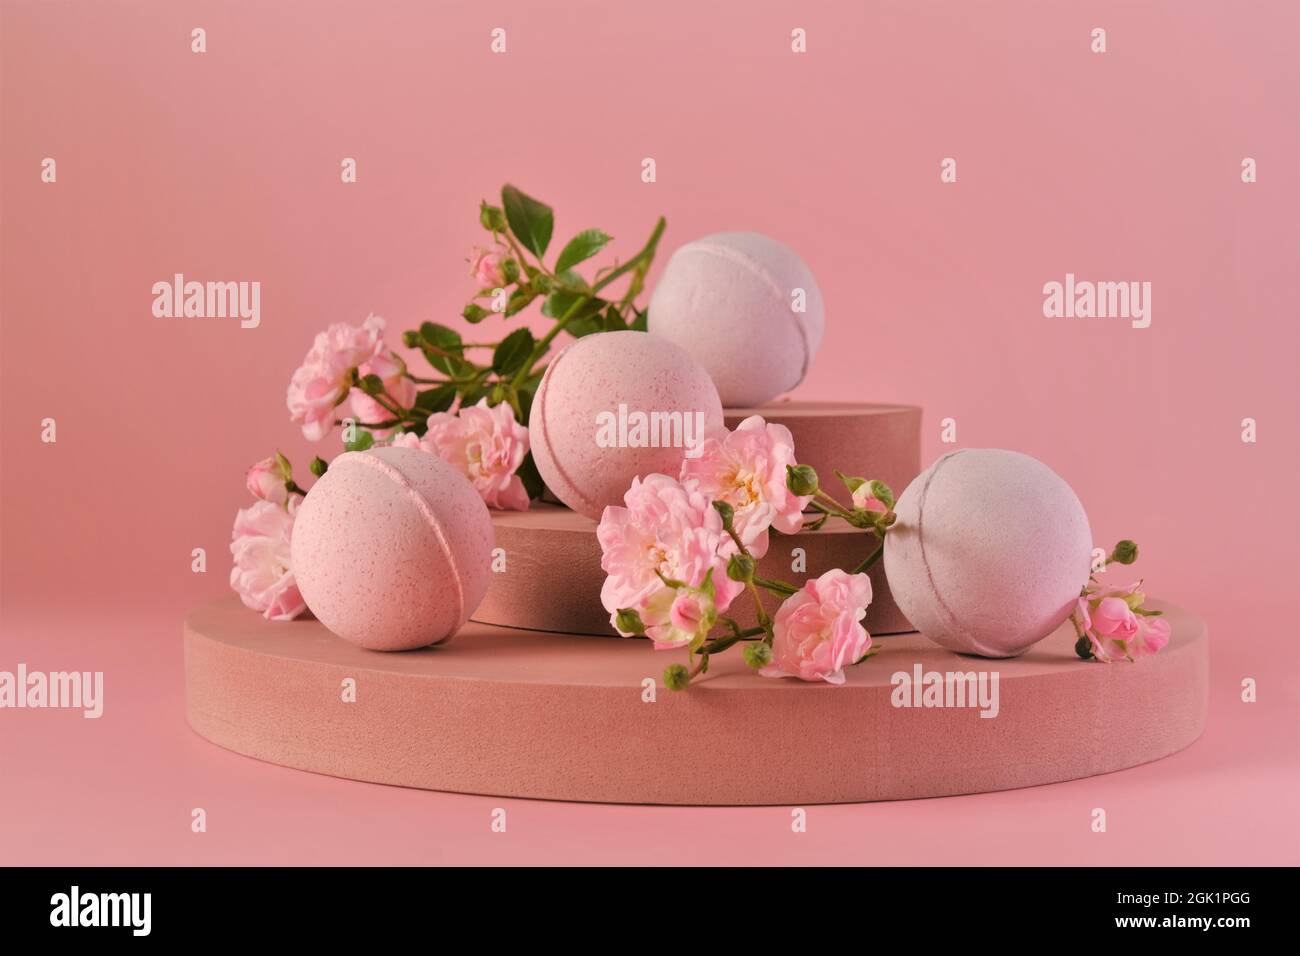 Badebomben mit Rosenextrakt.Rosa Badebomben und rosa Rosenblüten auf burgunderrotem Sockel auf einer rosa background.Organic Kosmetik. Naturkosmetik mit Stockfoto